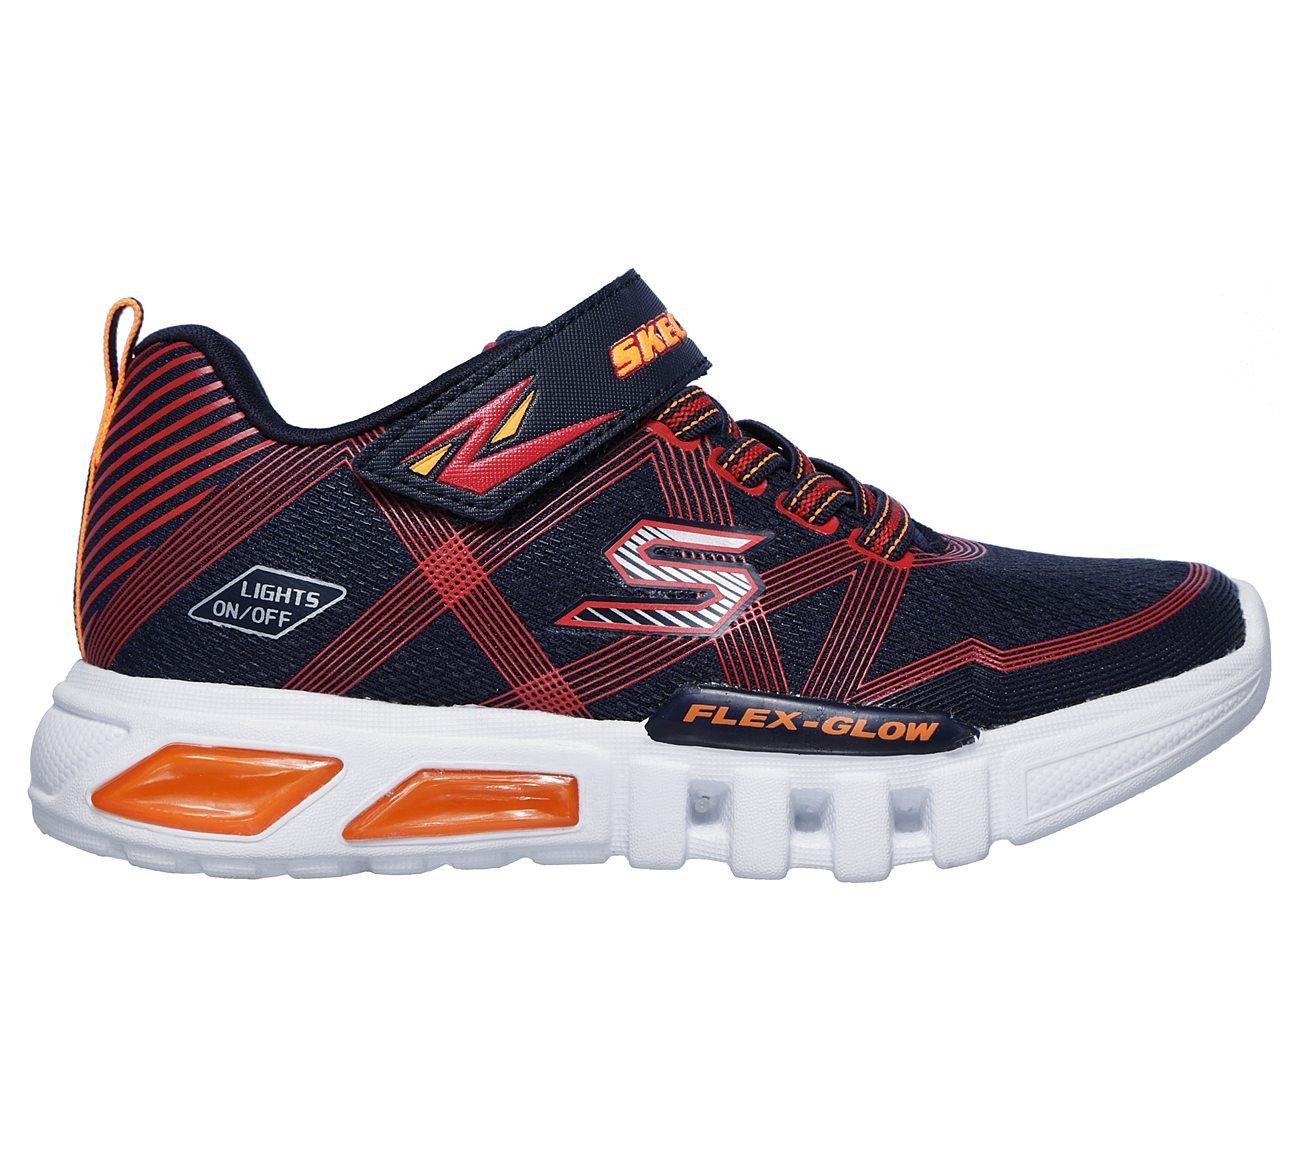 Skechers / dunkelblau orange Sneaker